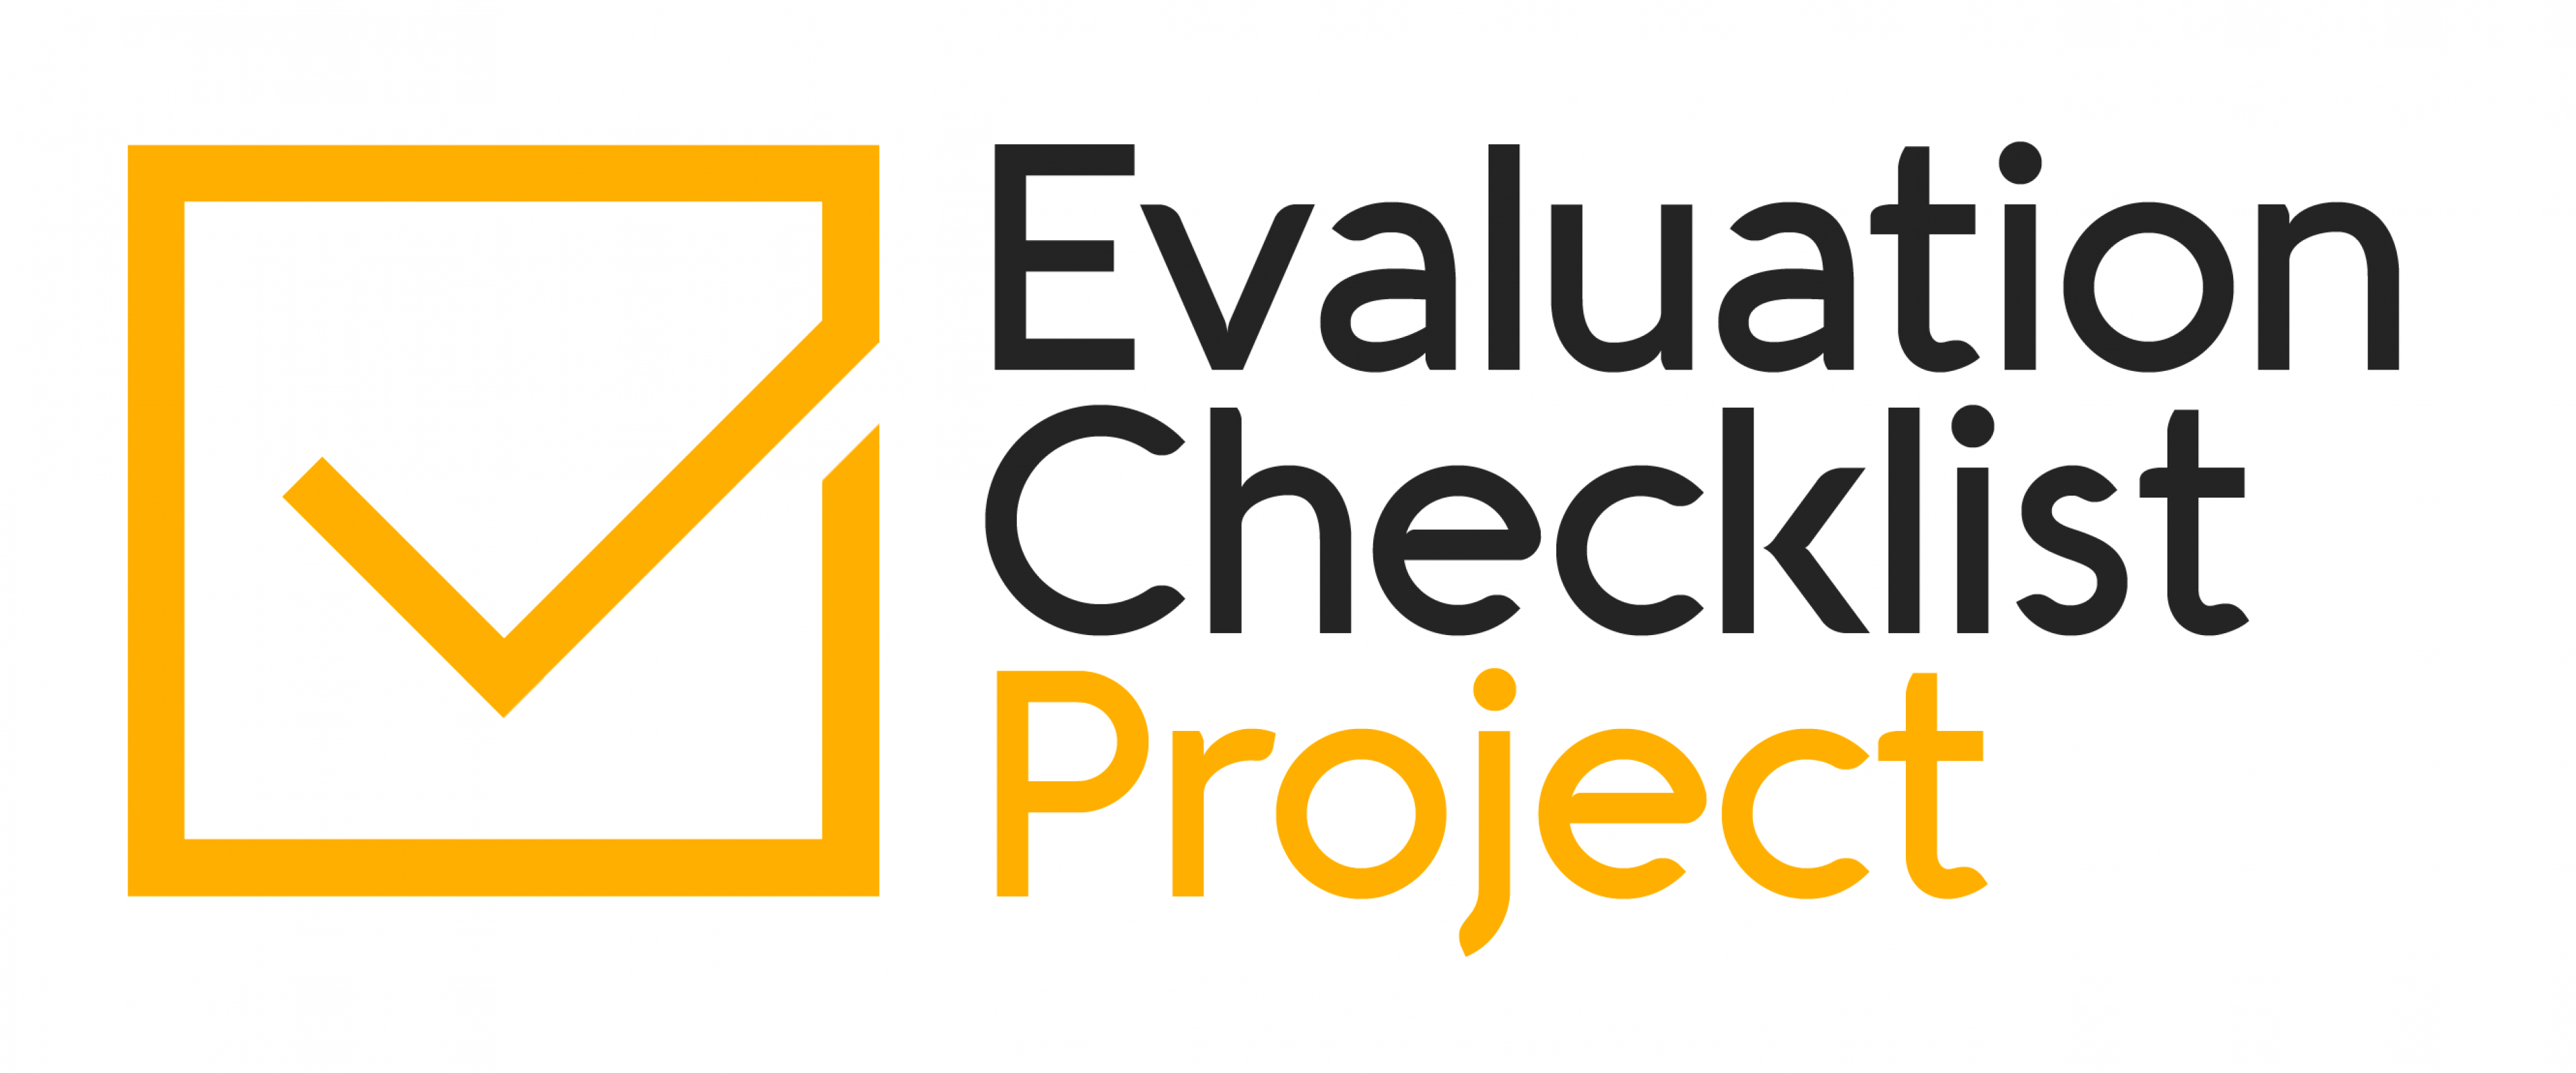 graphic- evaluation checklist project logo